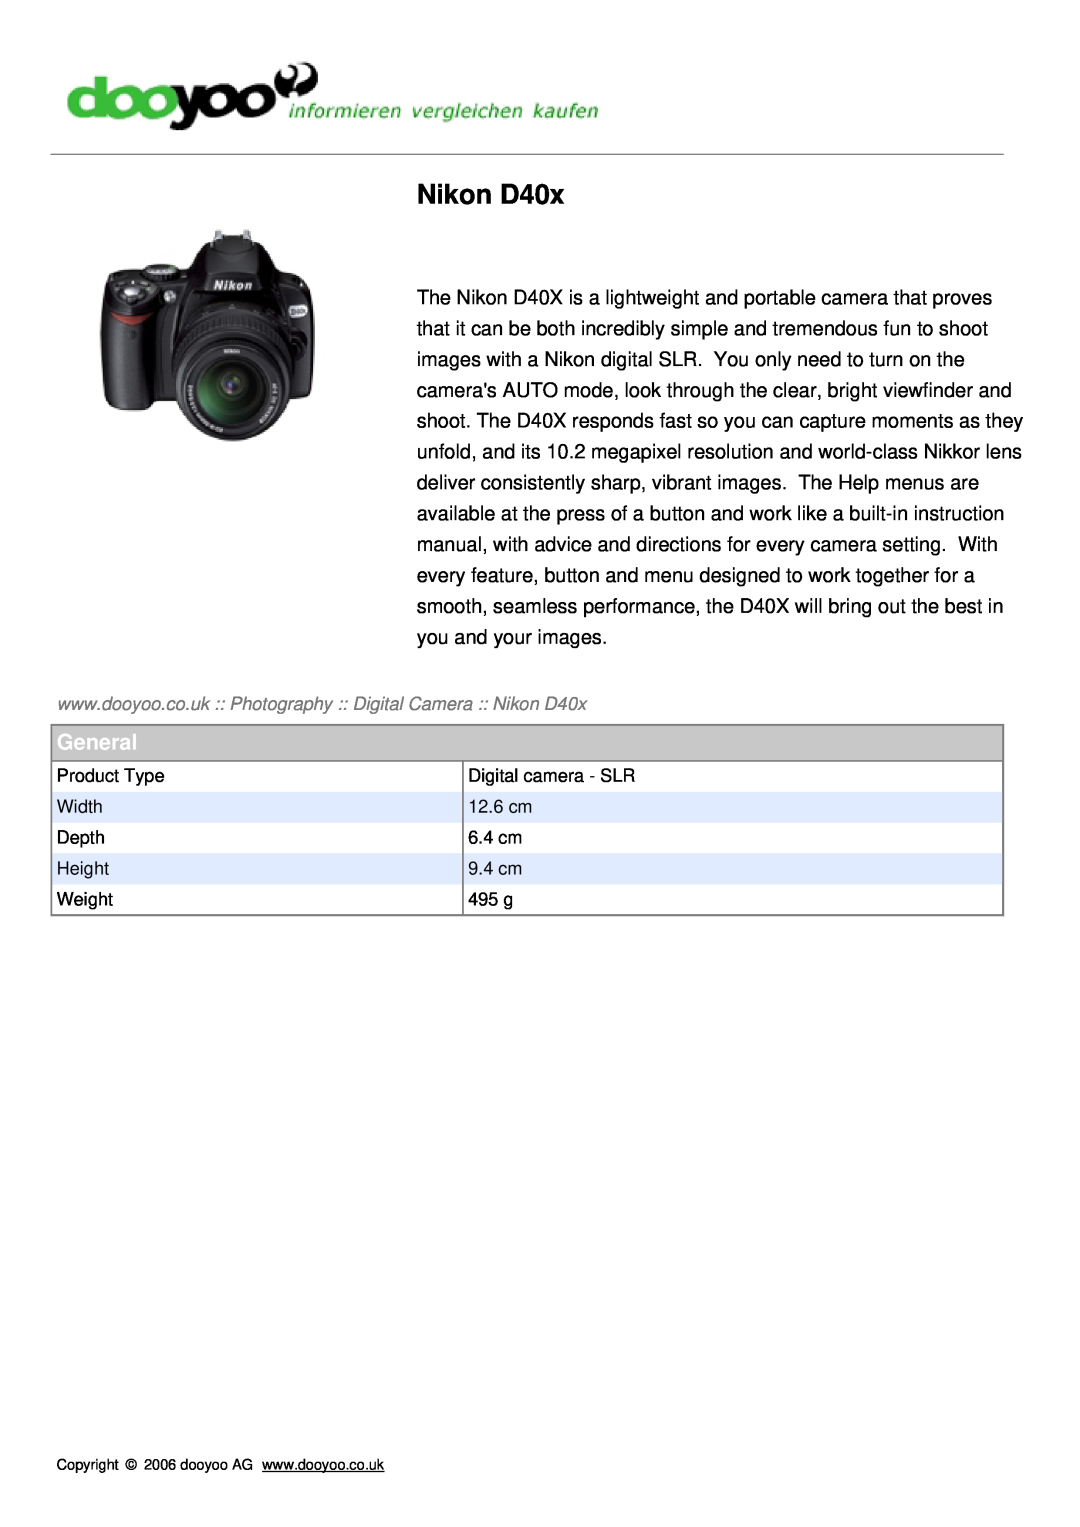 Nikon D40X specifications 10.2, Your Life Is a Masterpiece, Nikon Inc, ef fective megapixels 